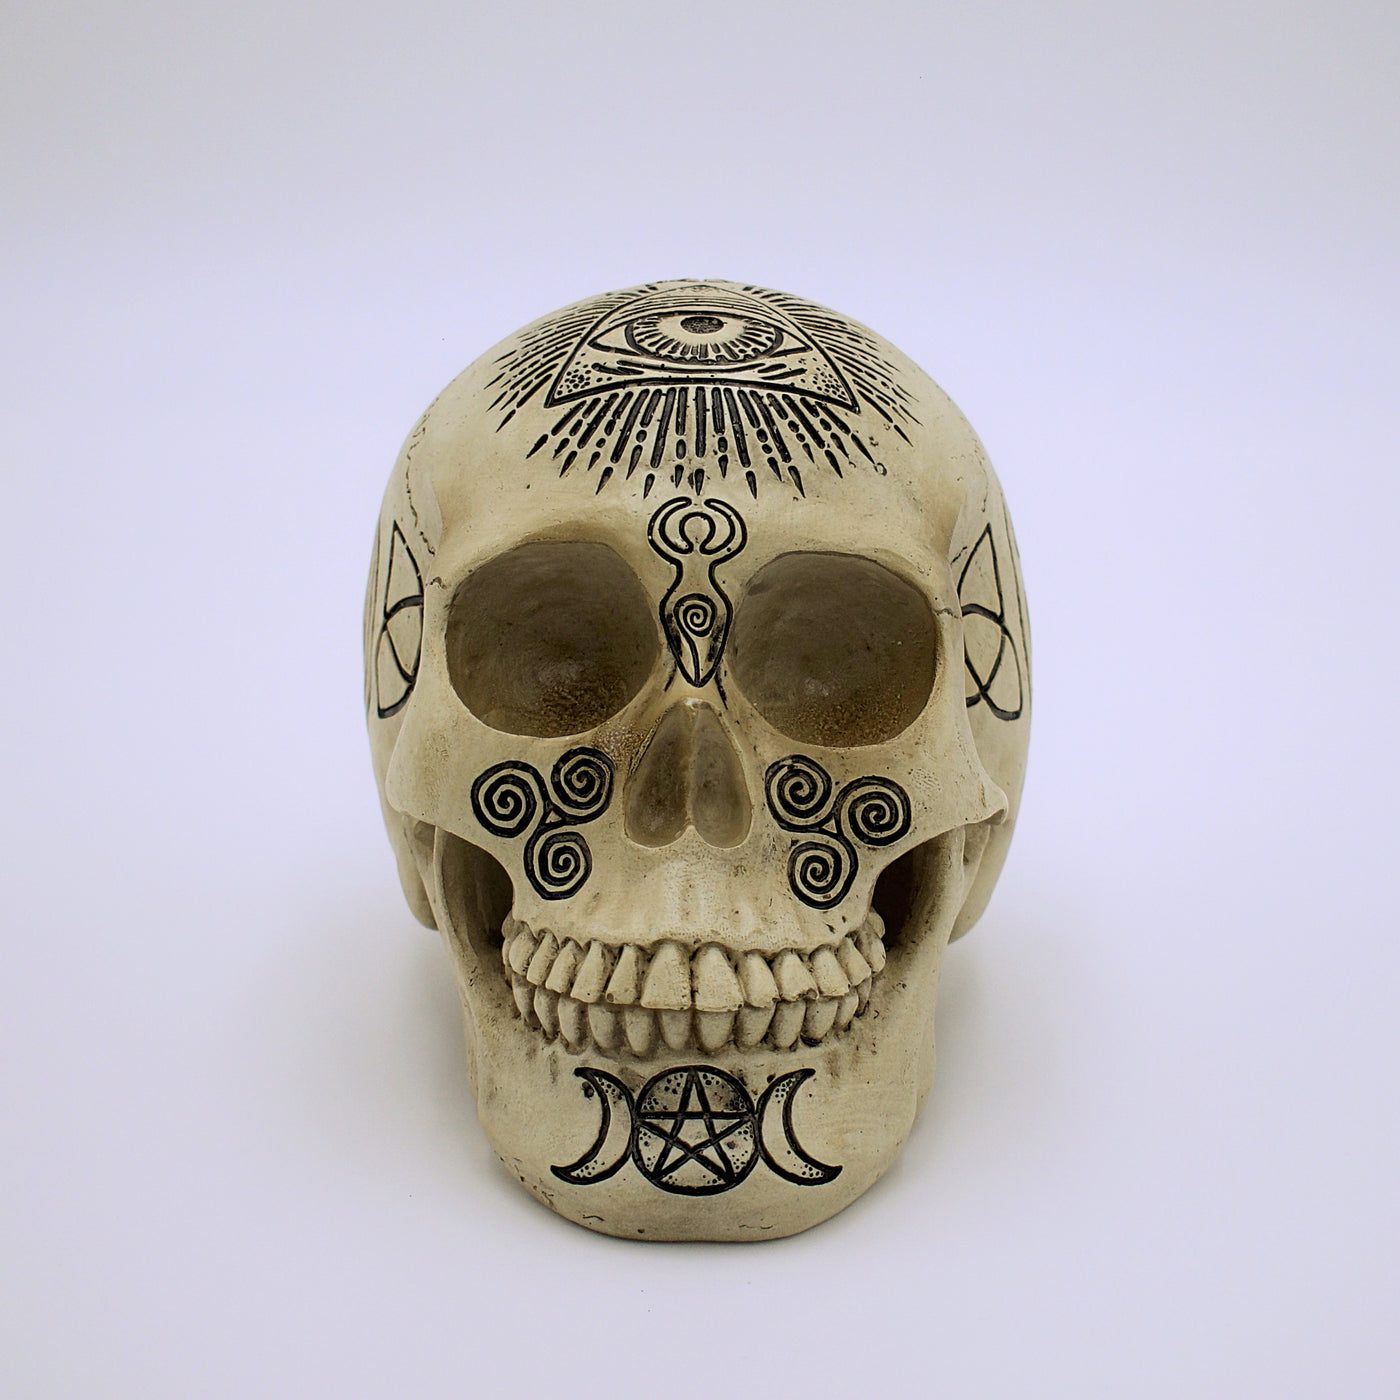 Witchcraft Symbols Skull Sculpture - The Cranio Collections